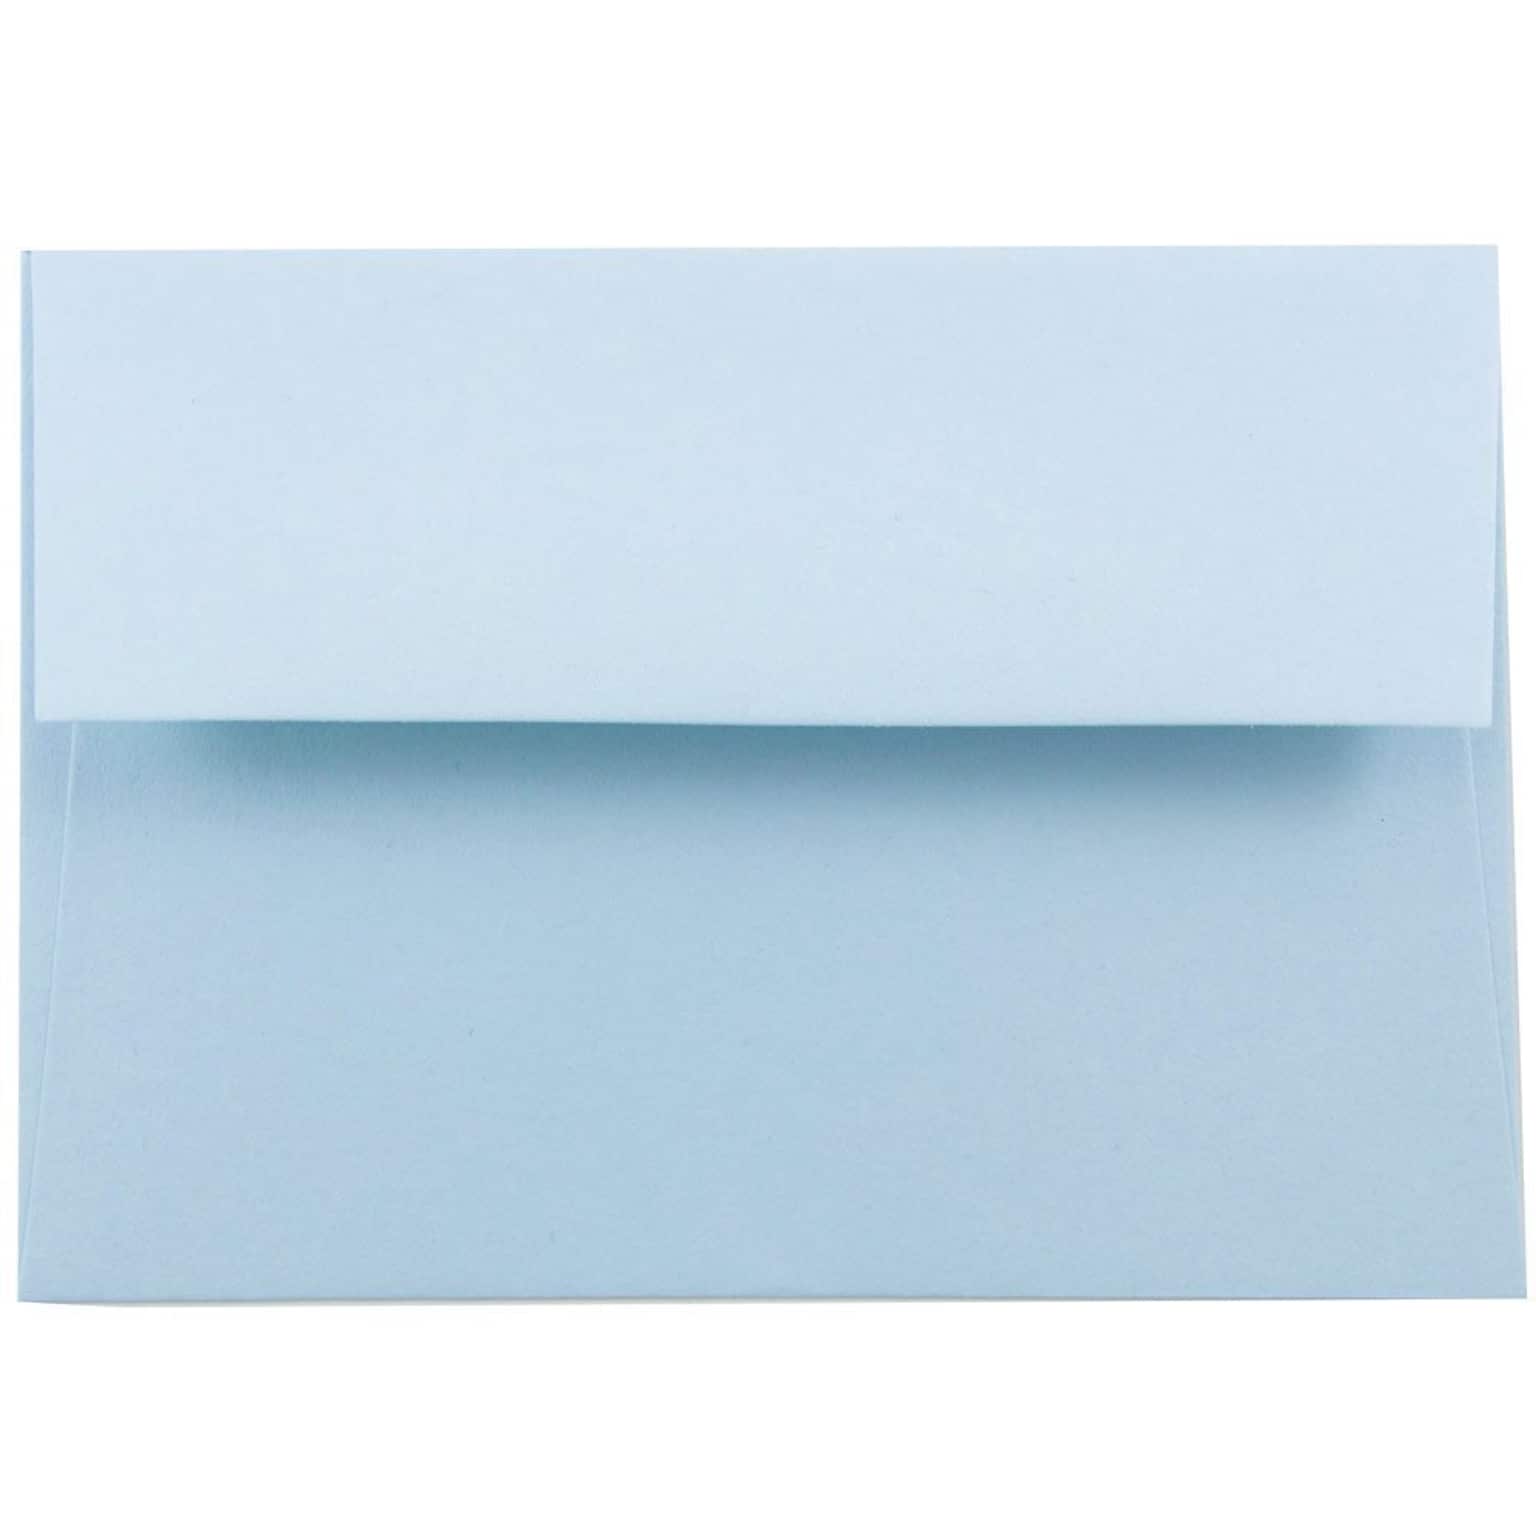 JAM Paper® 4Bar A1 Invitation Envelopes, 3.625 x 5.125, Baby Blue, 25/Pack (155622)